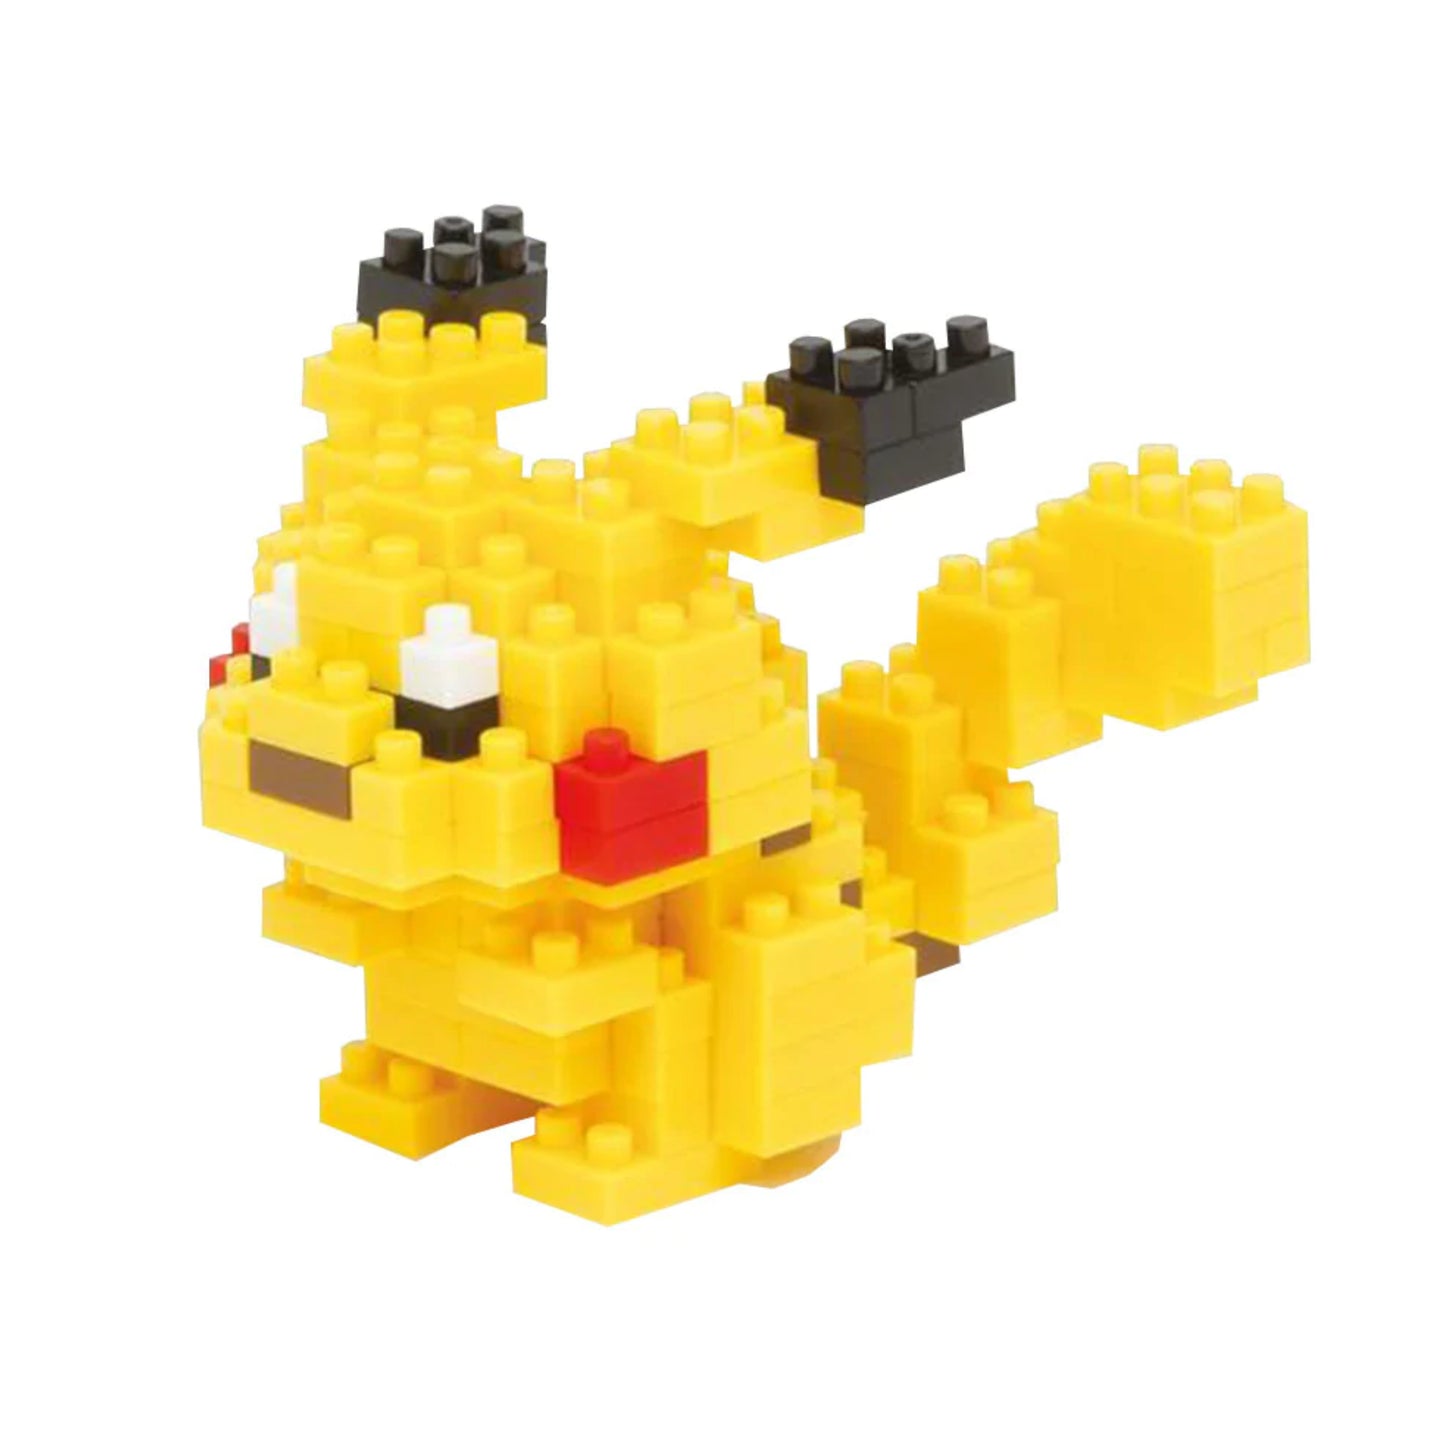 Nanoblock Pokemon Pikachu